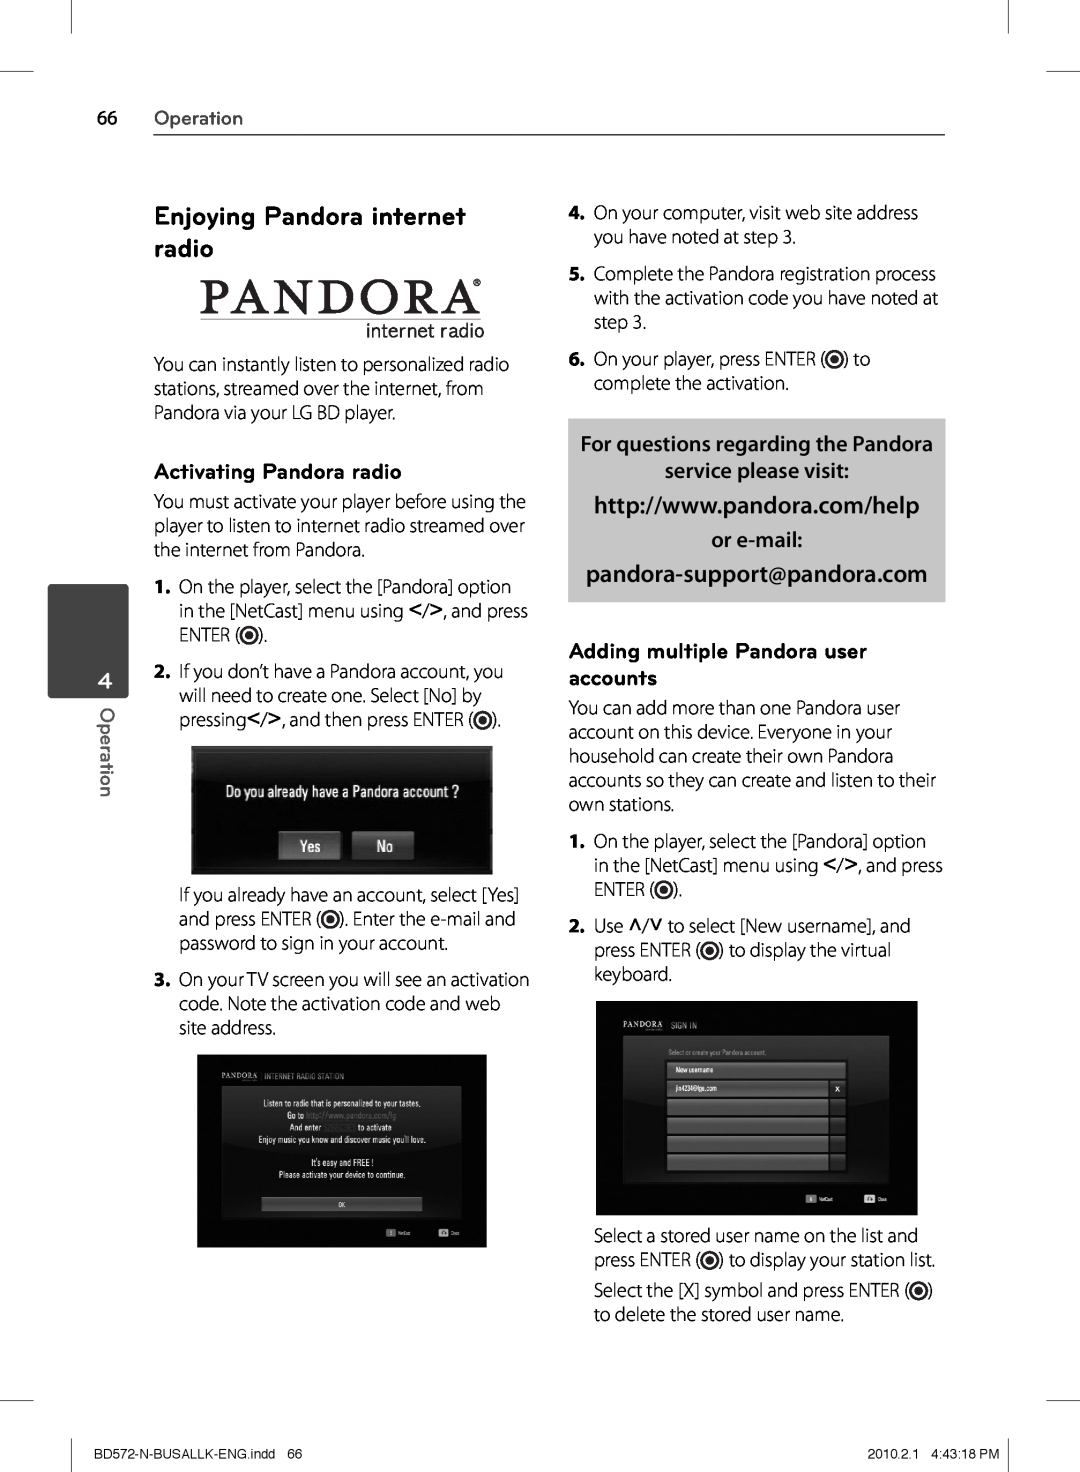 LG Electronics BD570 Enjoying Pandora internet radio, pandora-support@pandora.com, Activating Pandora radio, or e-mail 